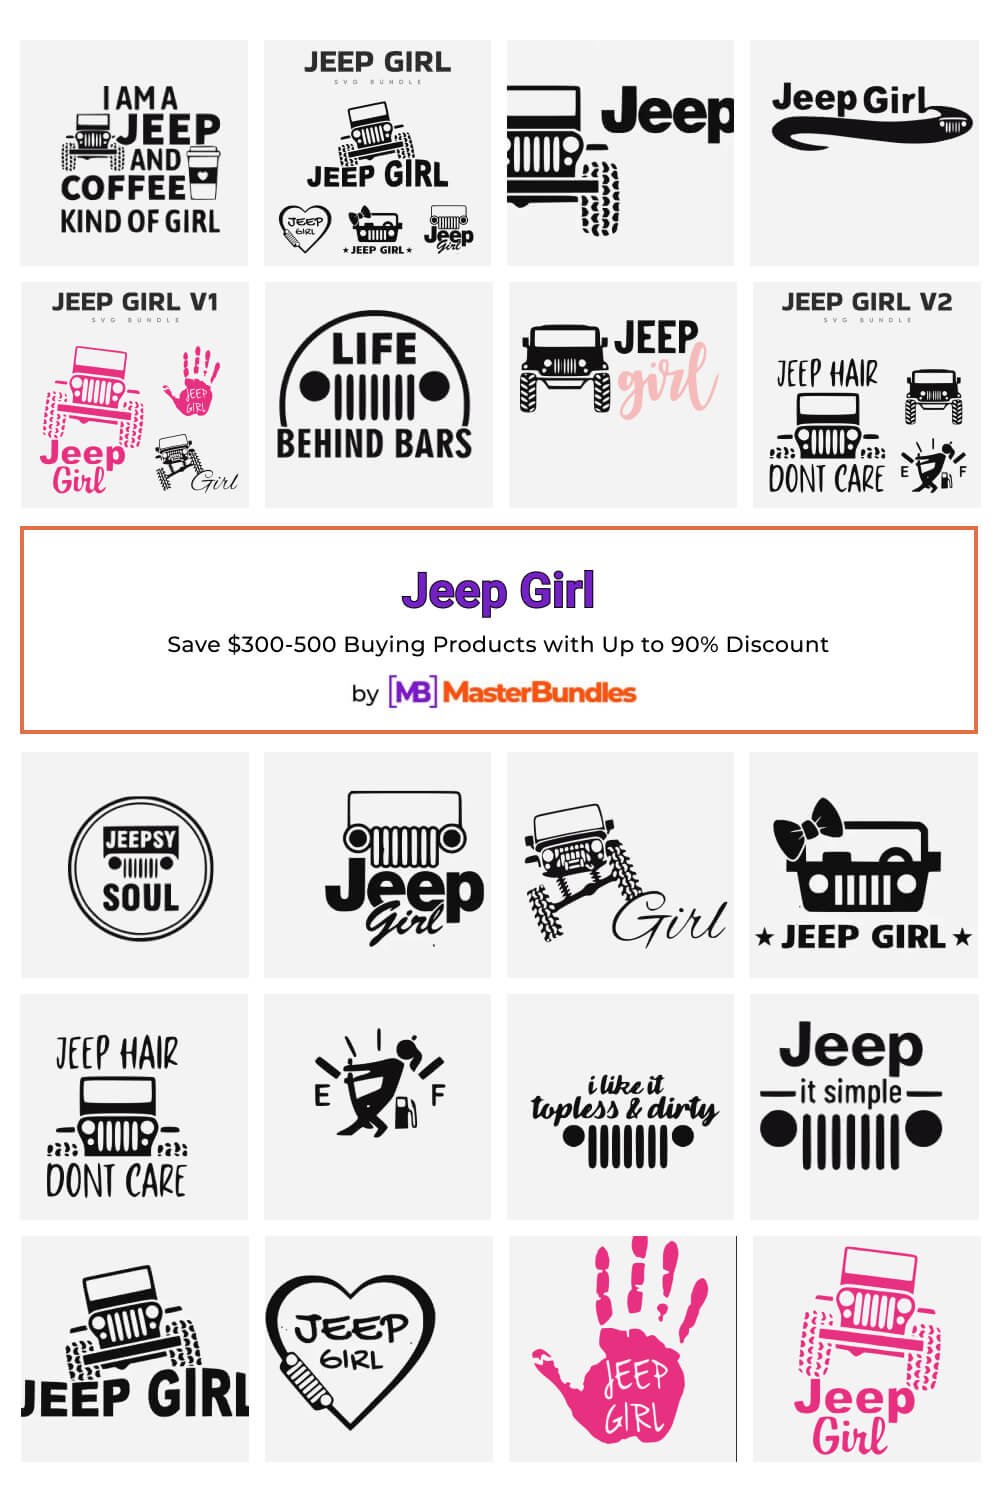 jeep girl pinterest image.